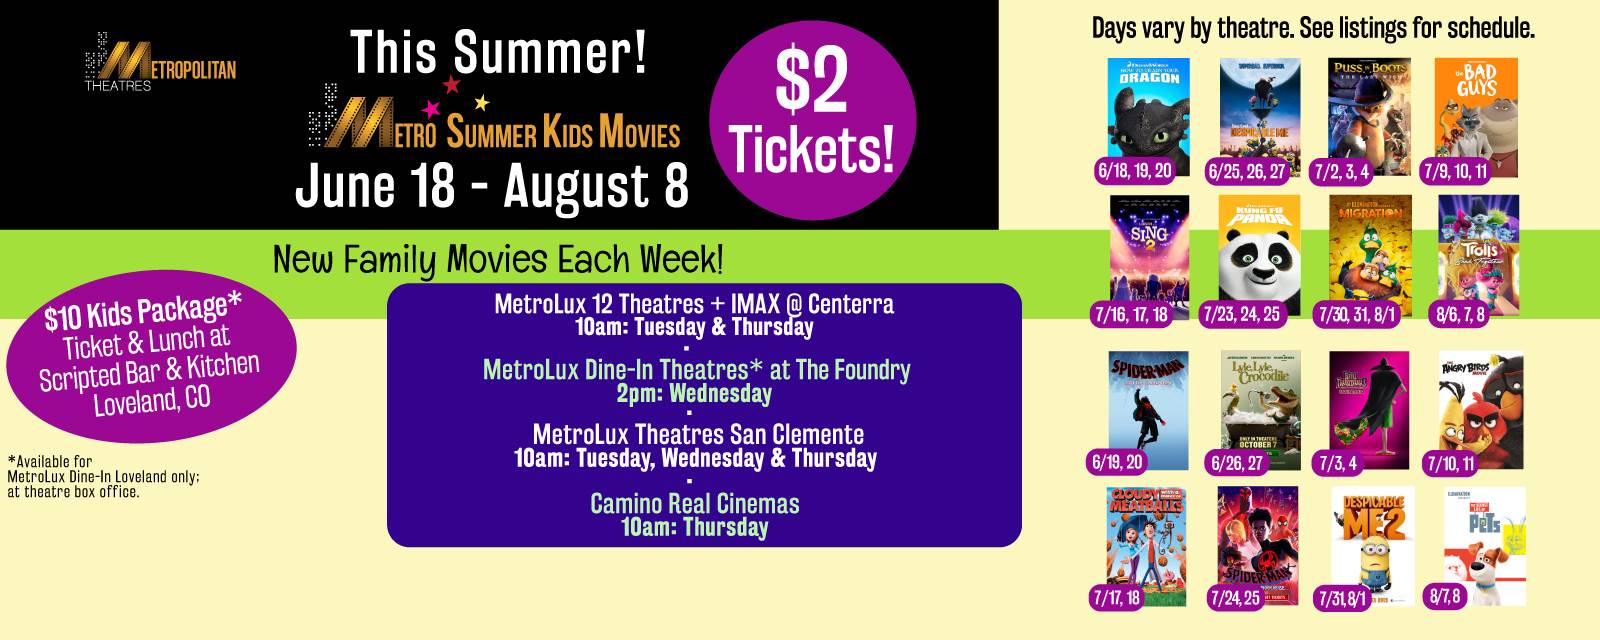 Metro Summer Kids Movies